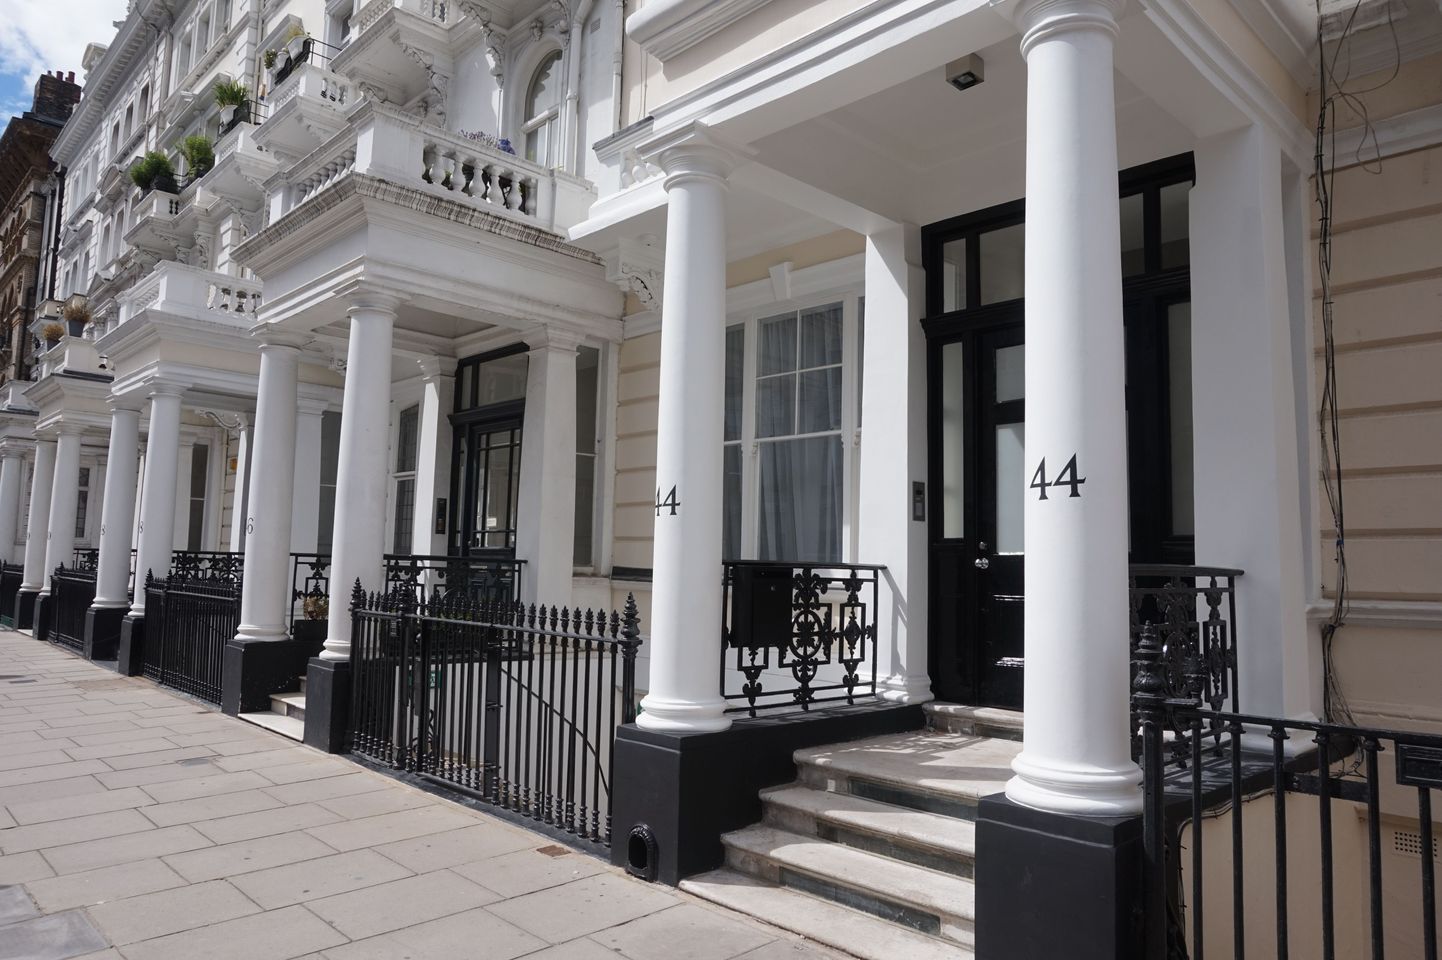 Eesti saatkond Londonis kolis uude vastrenoveeritud hoonesse aadressil 44 Queen’s Gate Terrace.